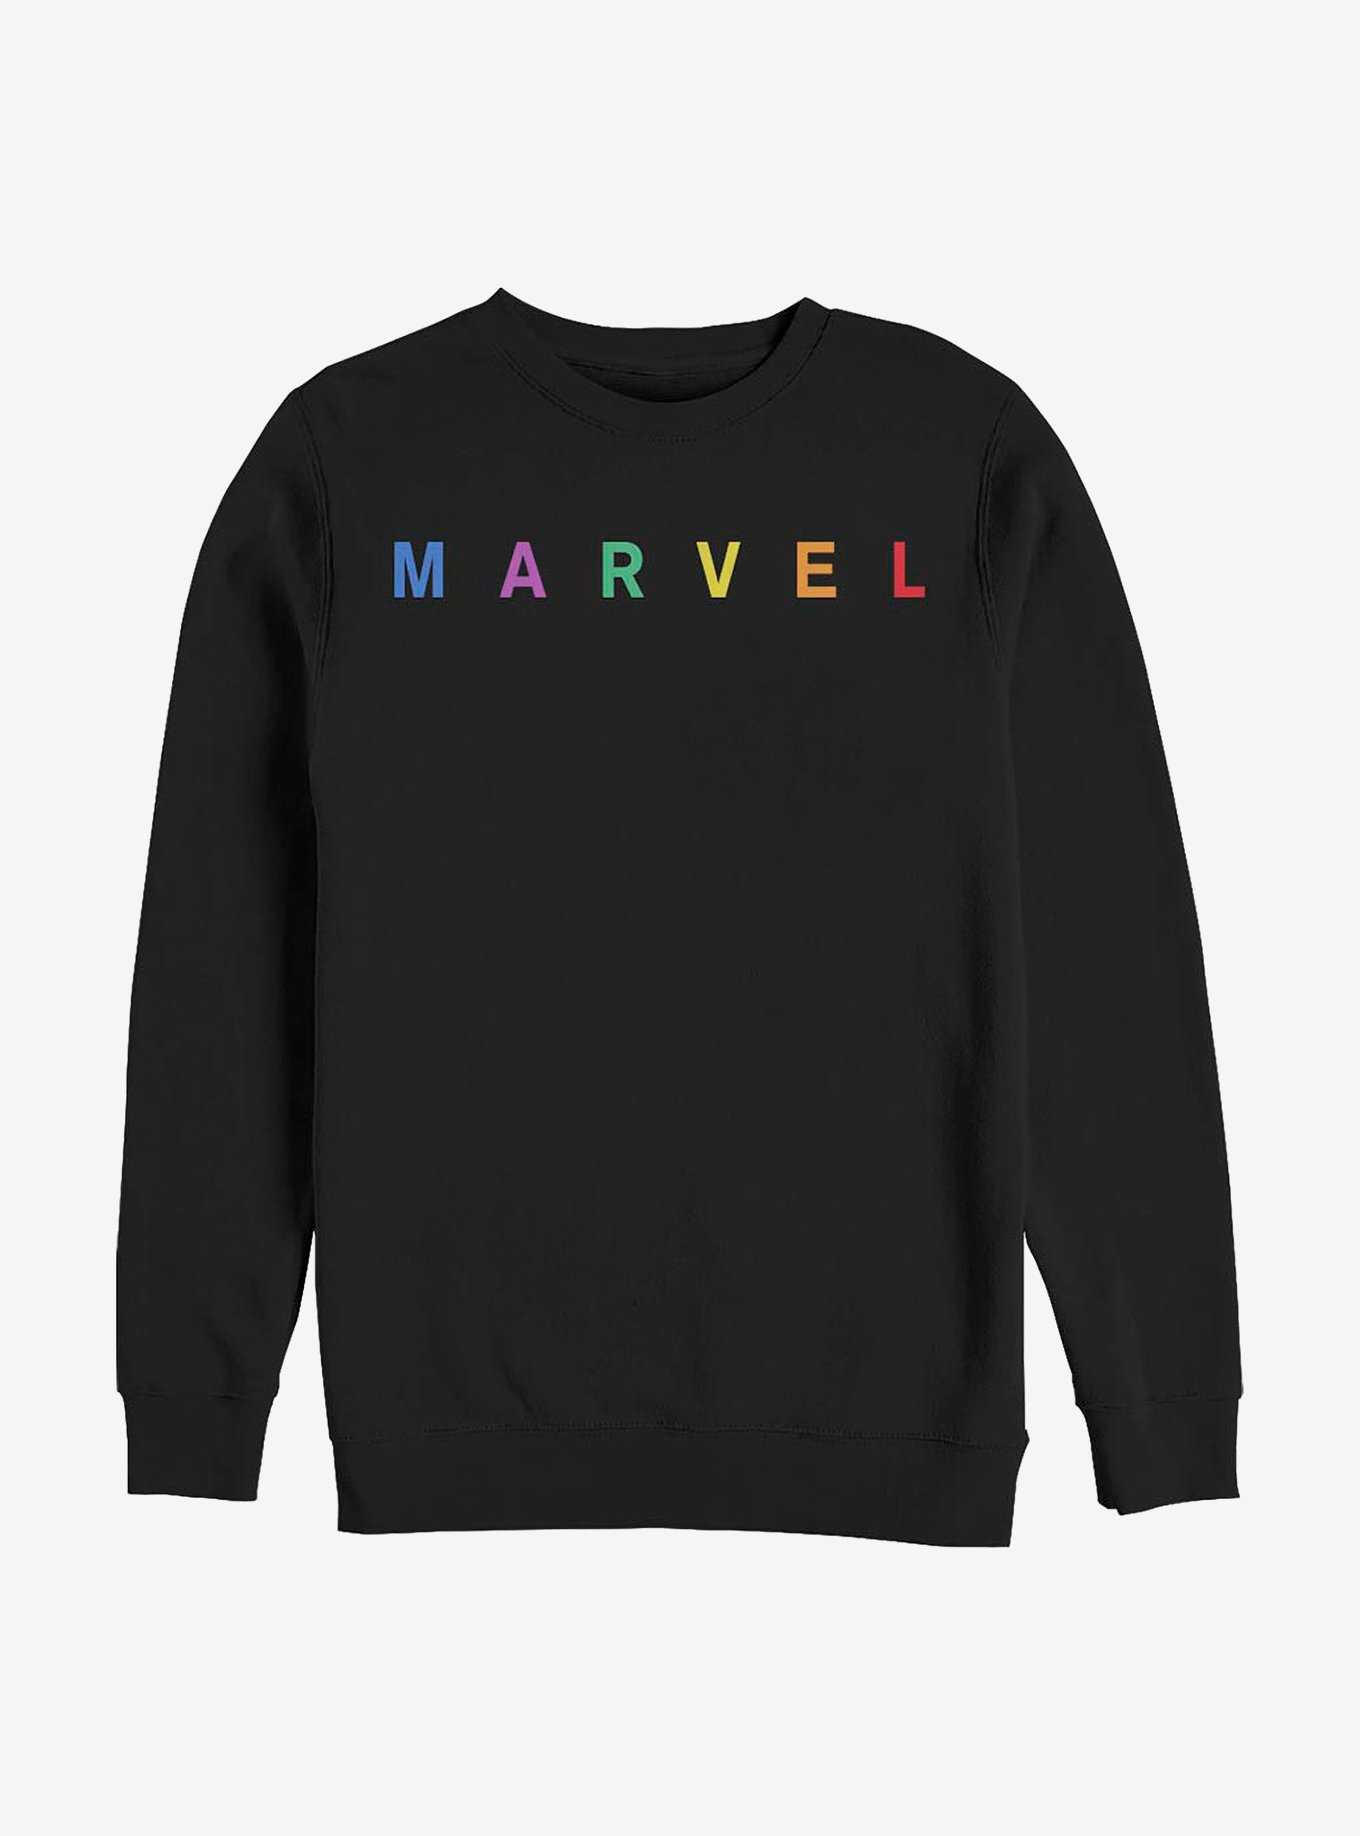 Marvel Simple Logo Emblem Sweatshirt, , hi-res